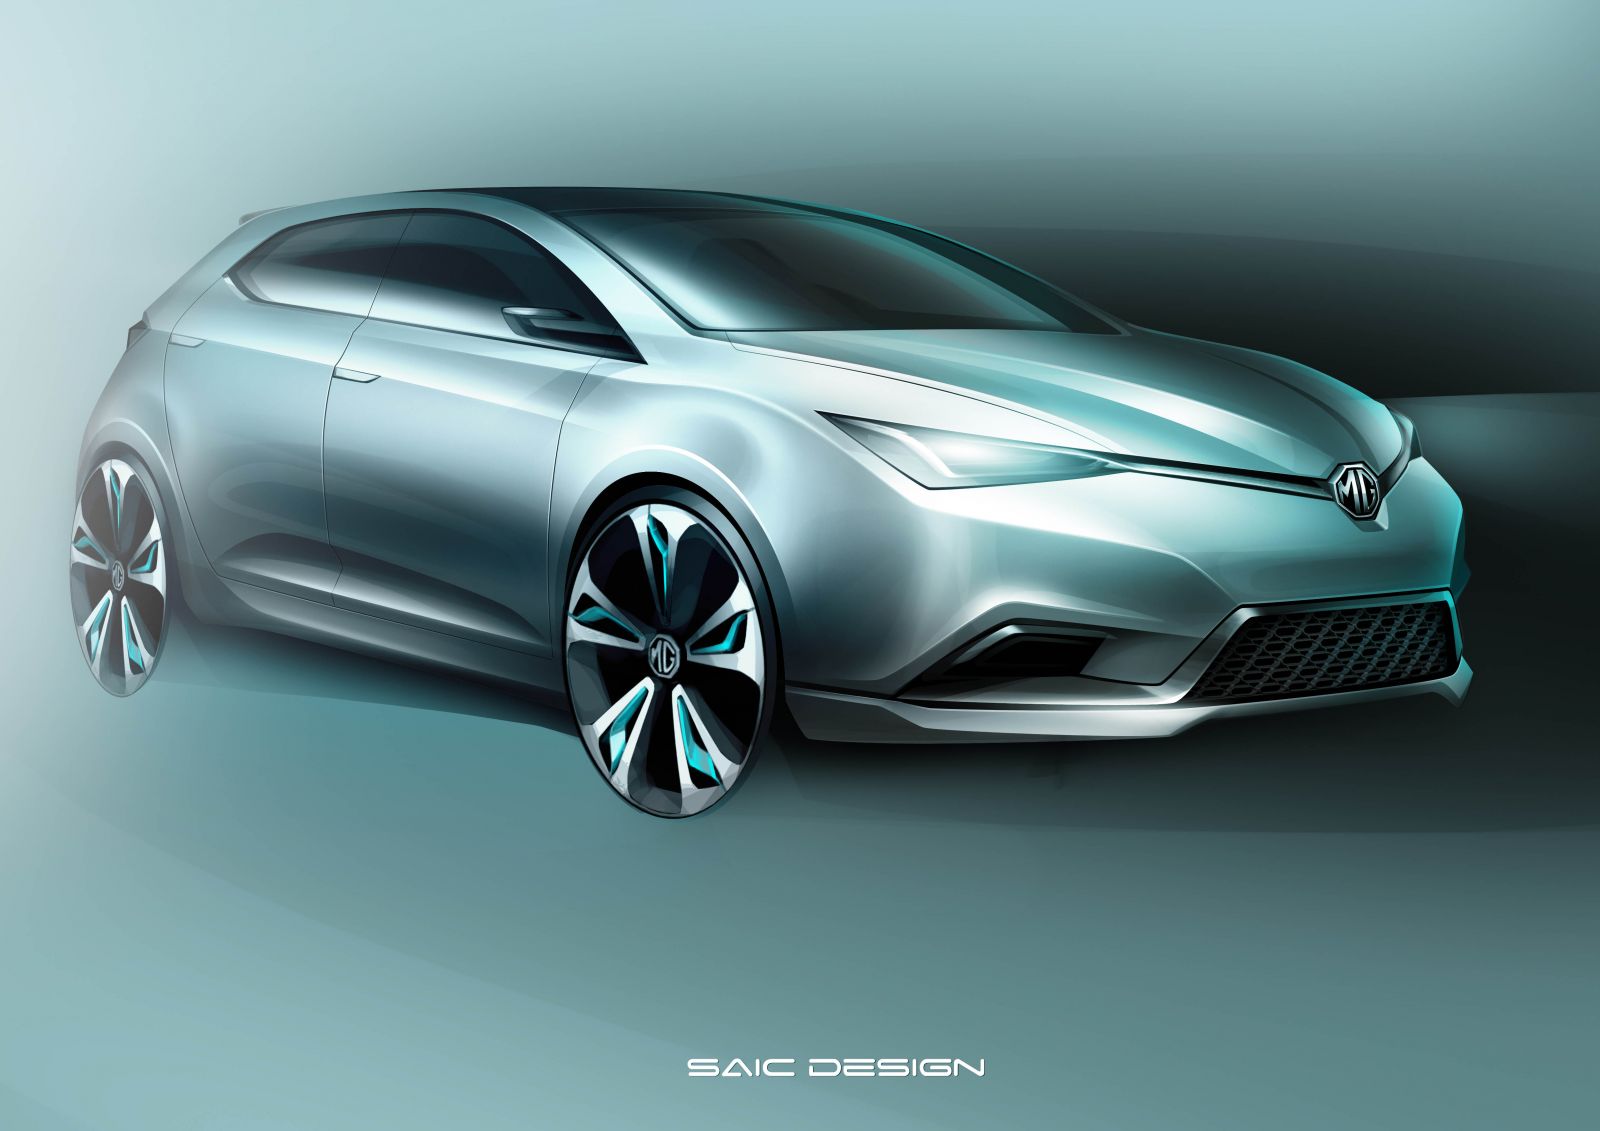 MG Concept 5, 2011 - Design Sketch